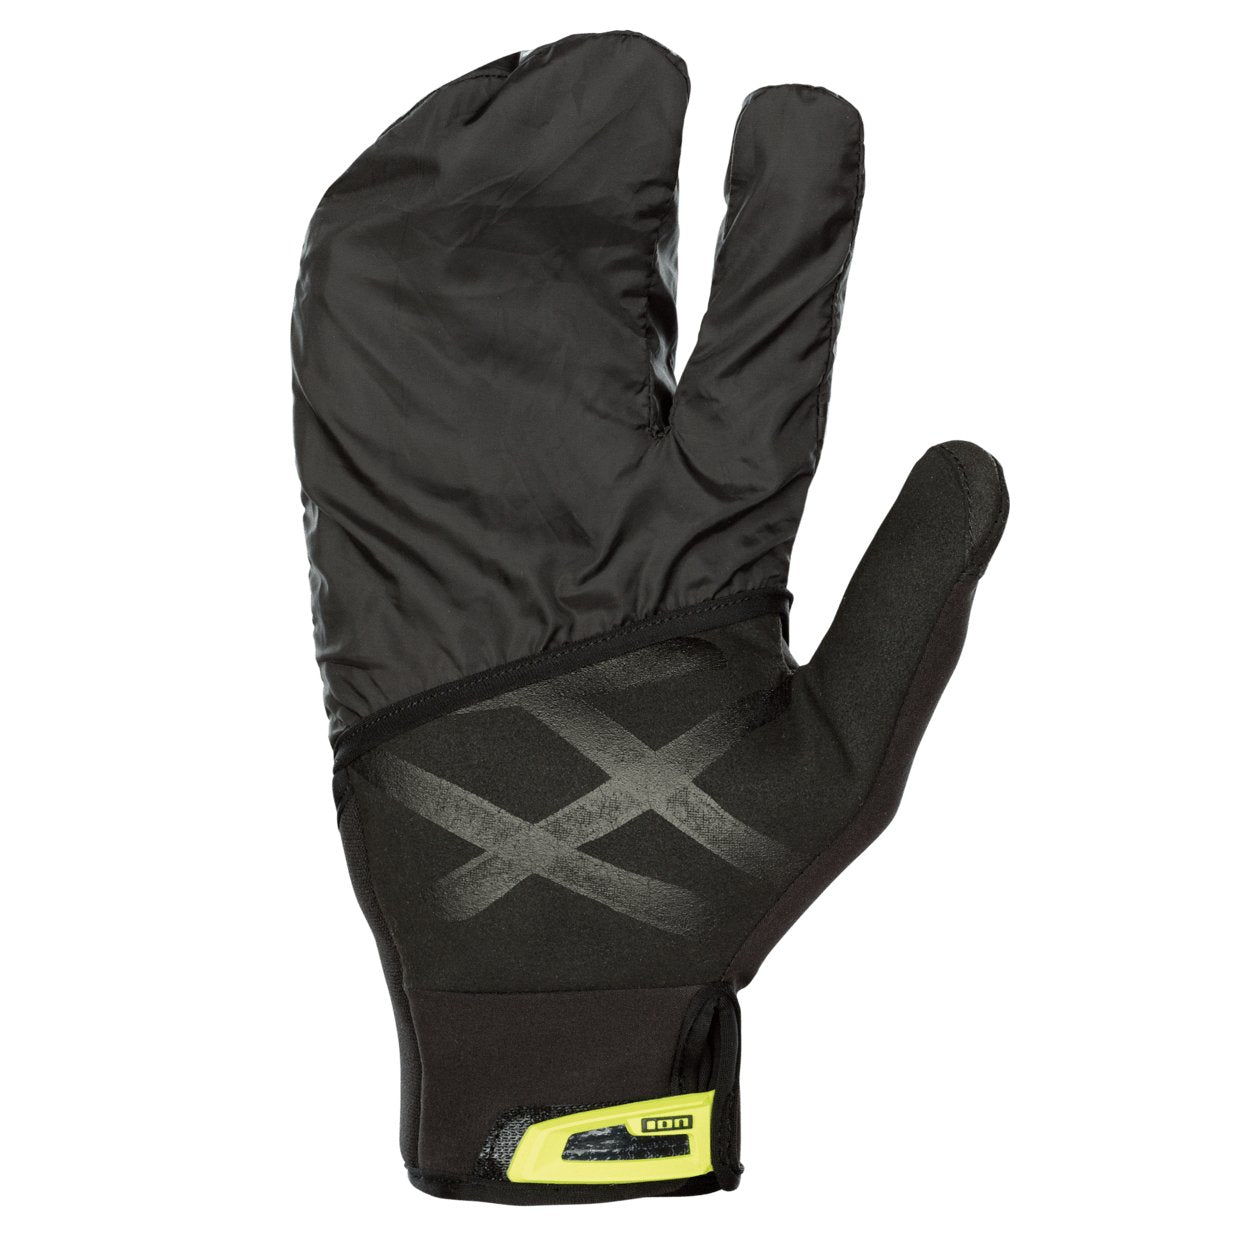 ION MTB Gloves Haze Amp 2022 - Worthing Watersports - 9008415763832 - Gloves - ION Bike